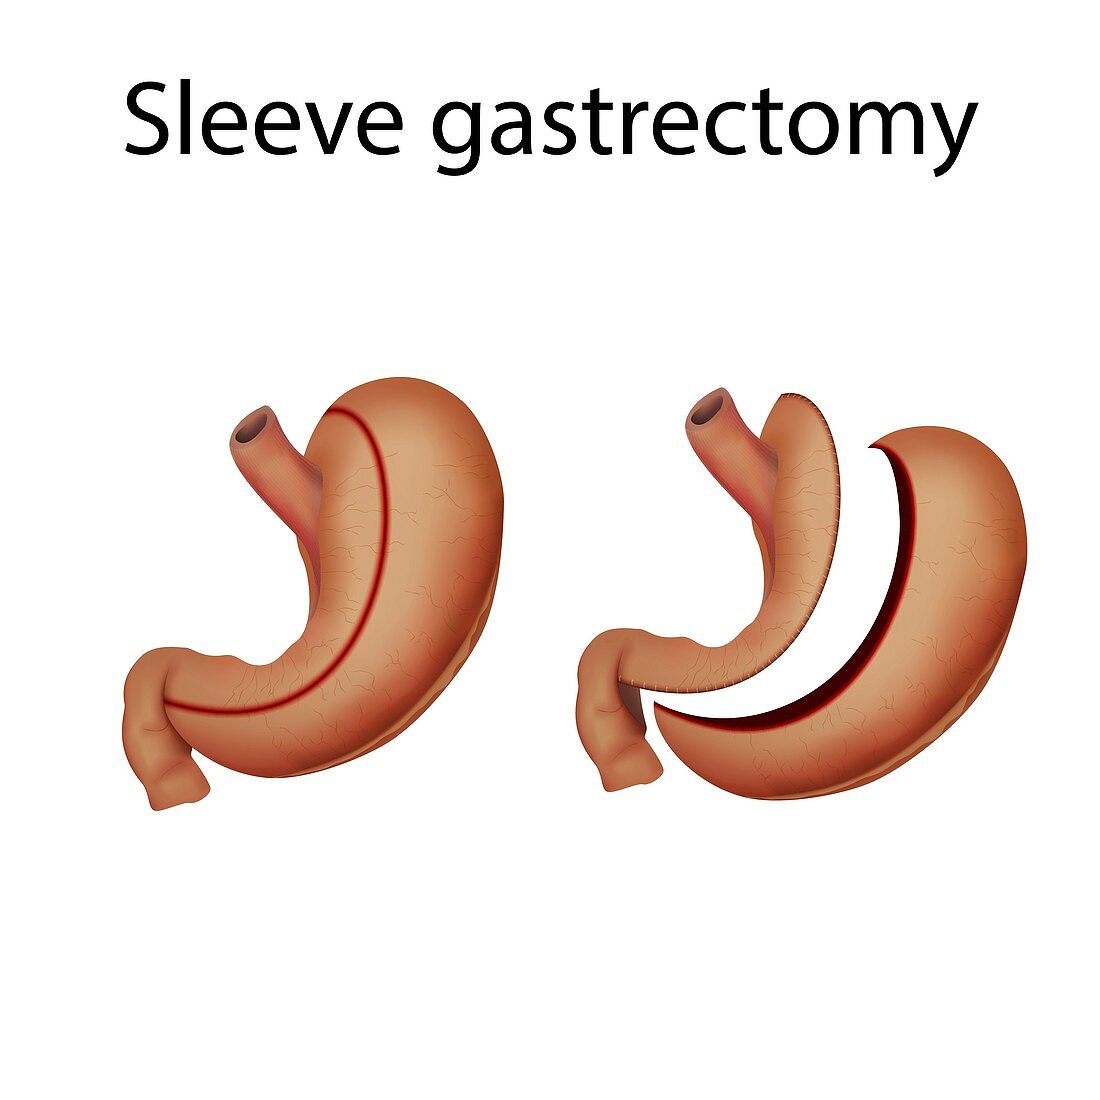 Sleeve gastrectomy,illustration